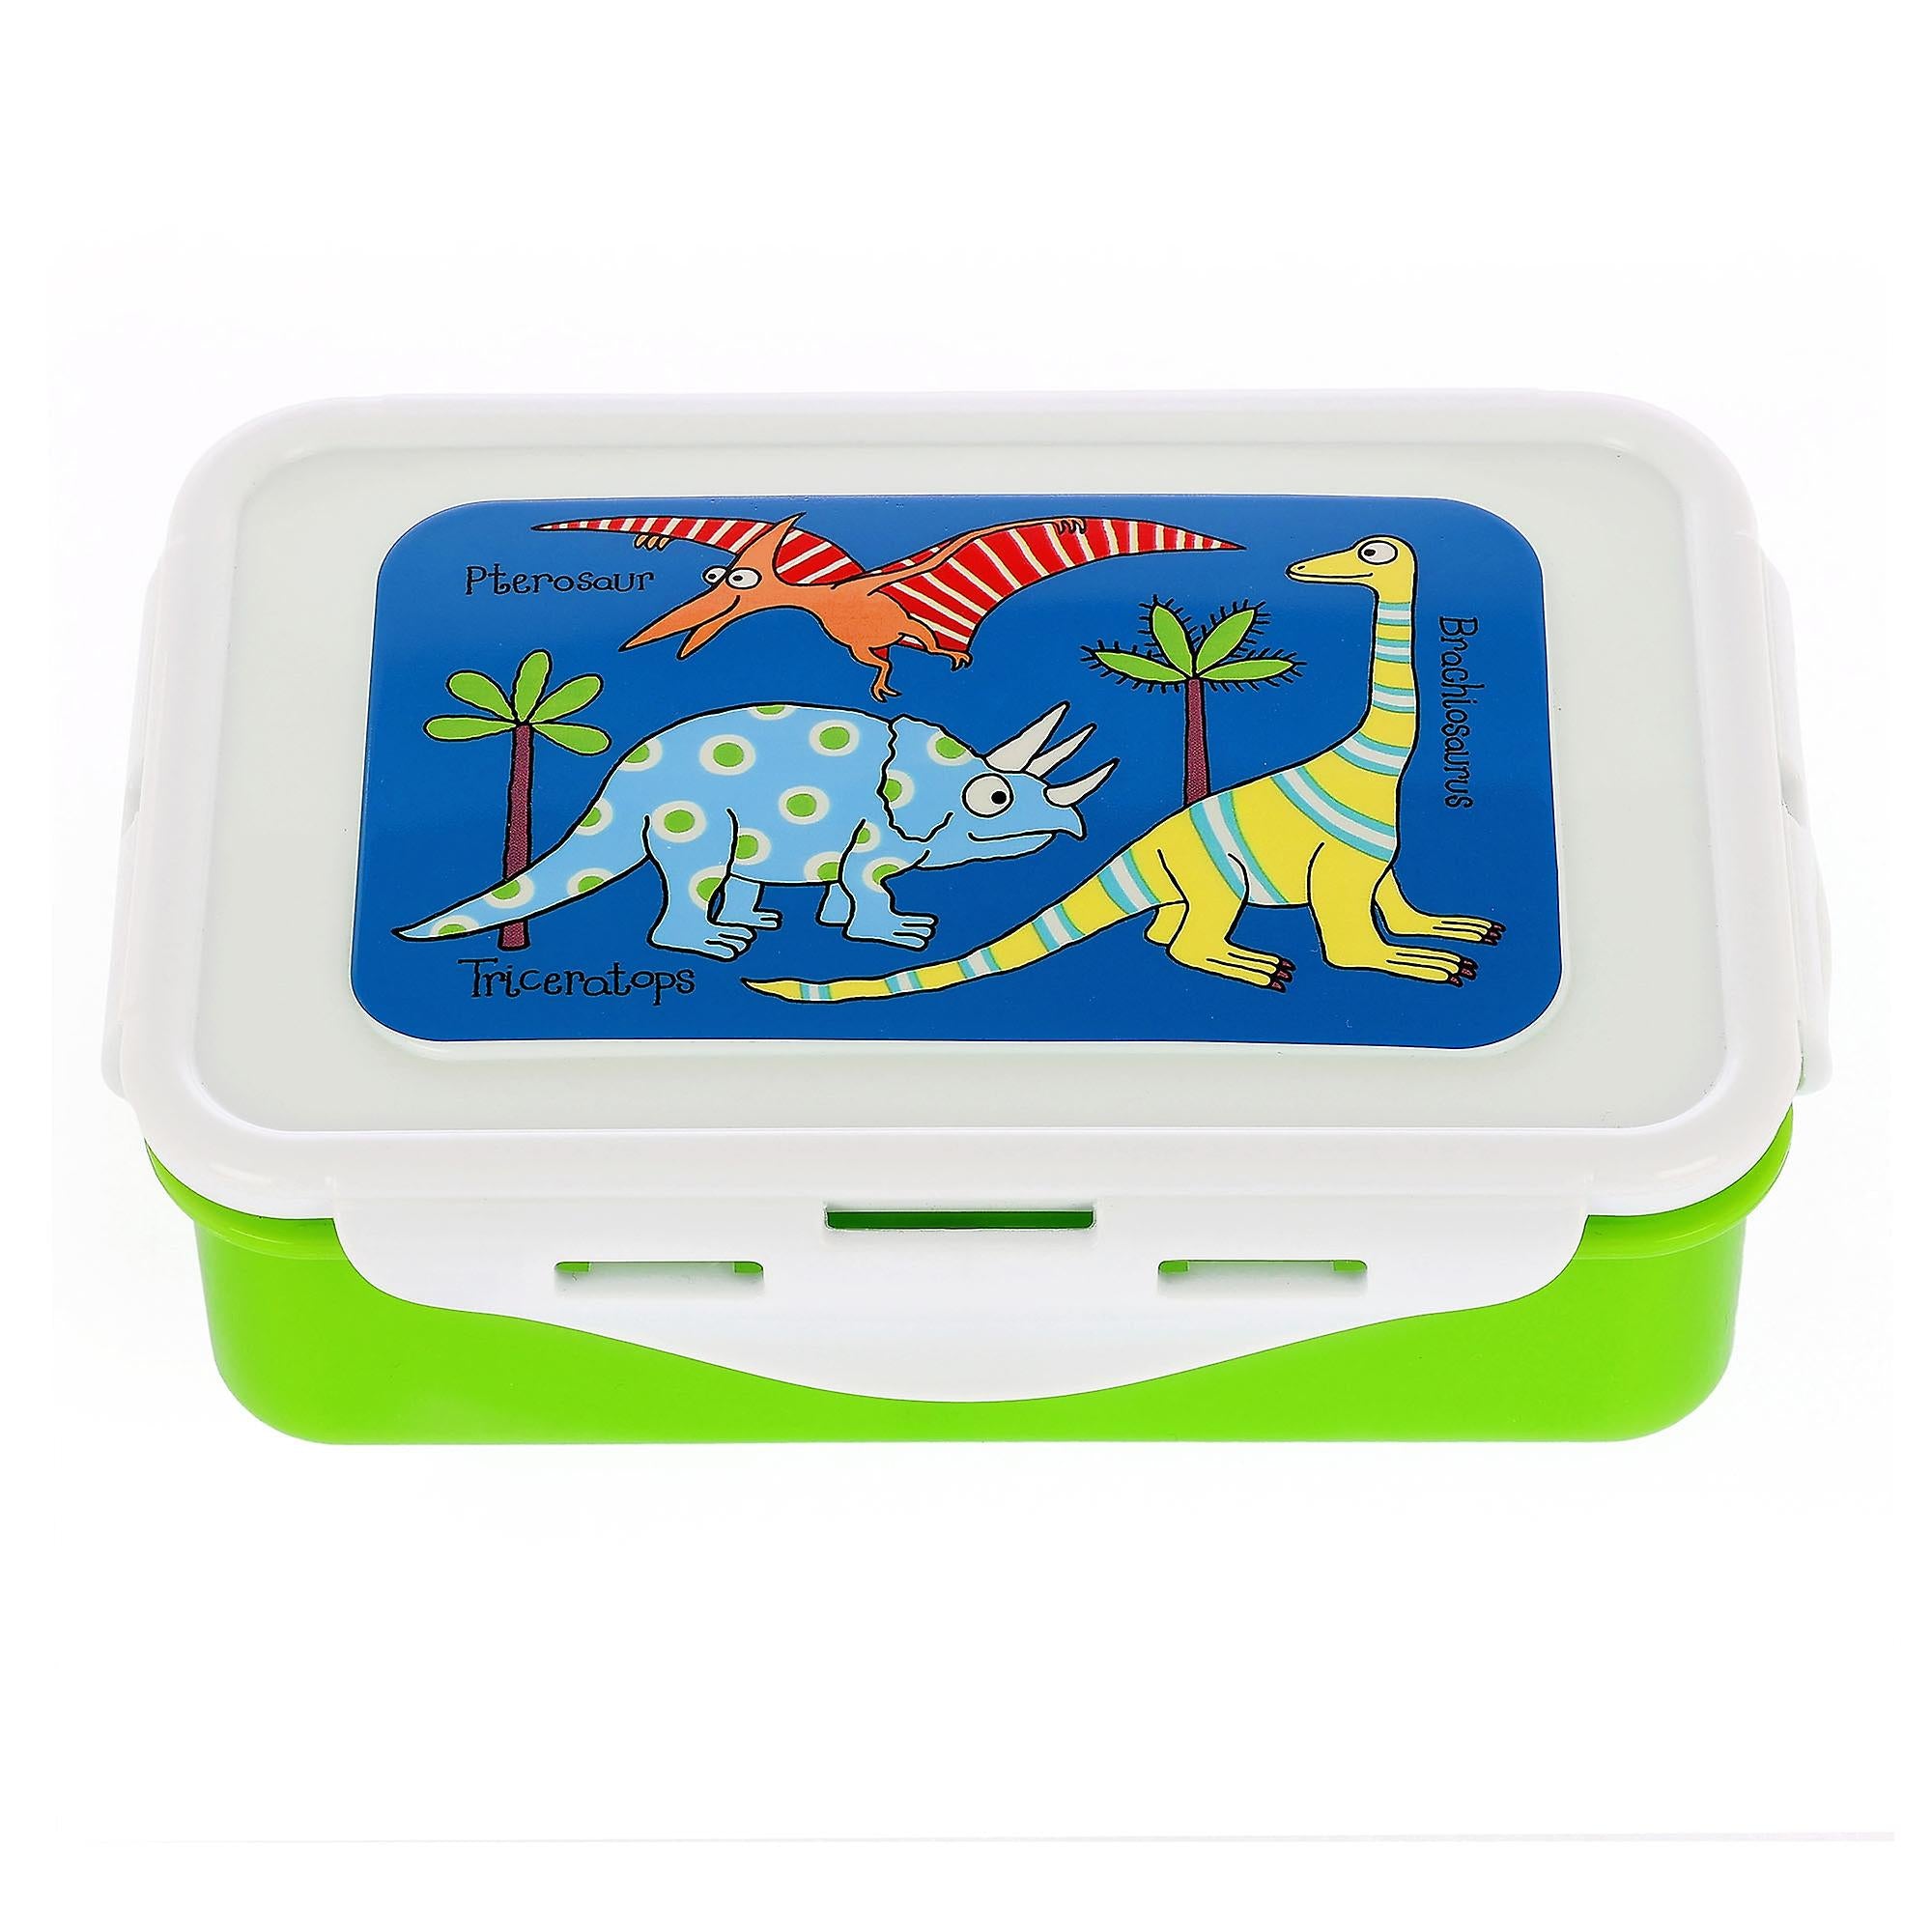 Dinosaurs Lunch Box